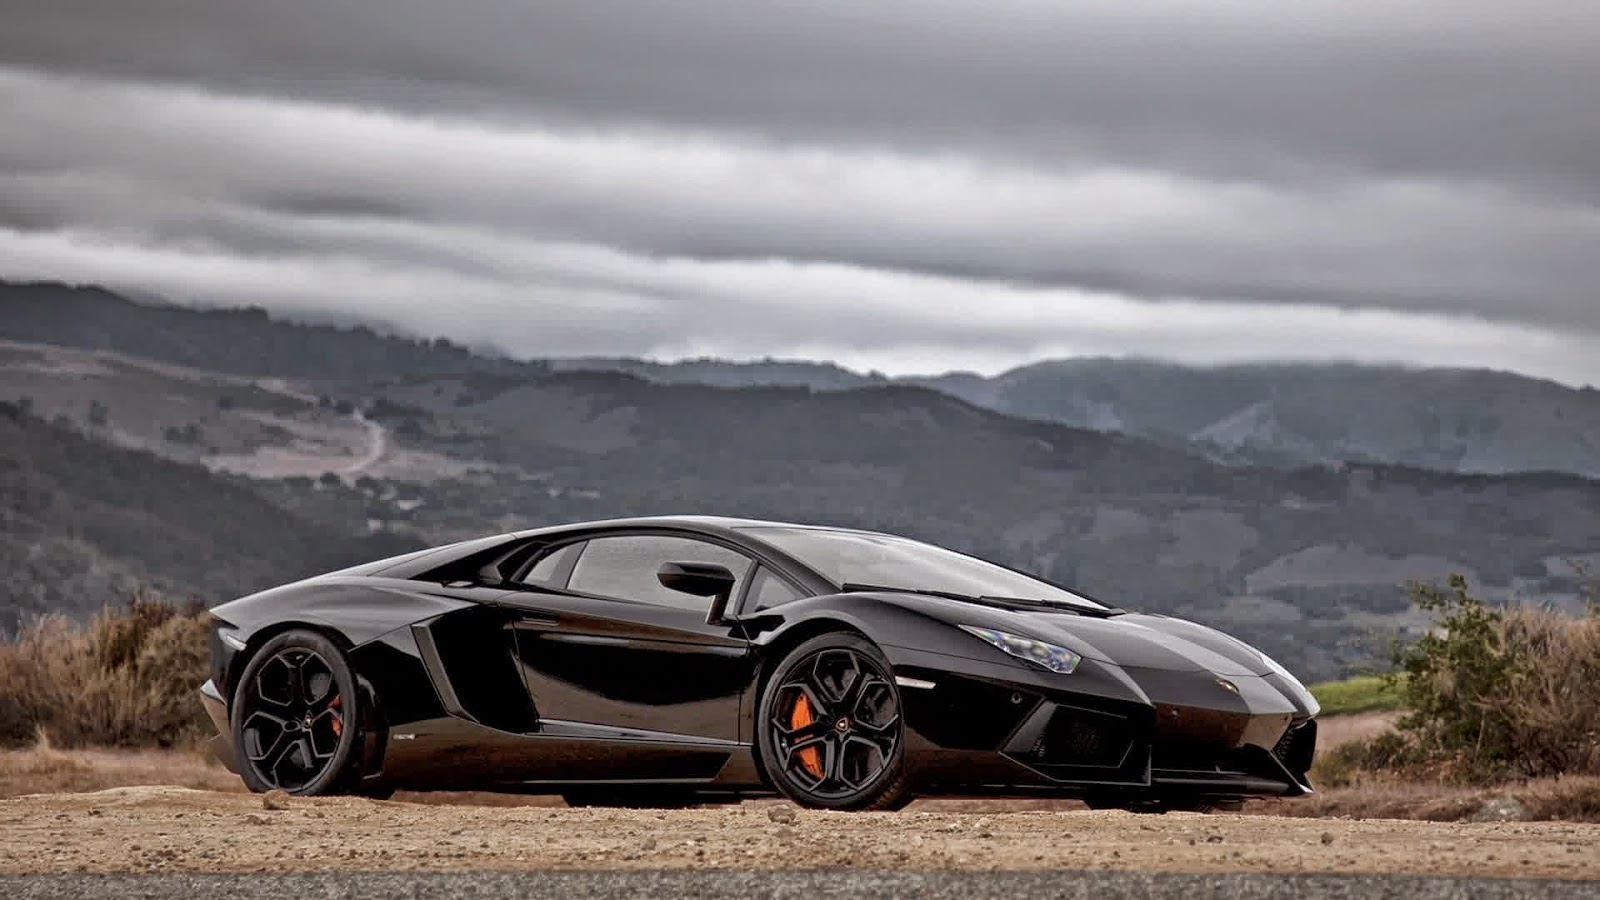 Black Lamborghini Aventador Wallpaper On The Mountain